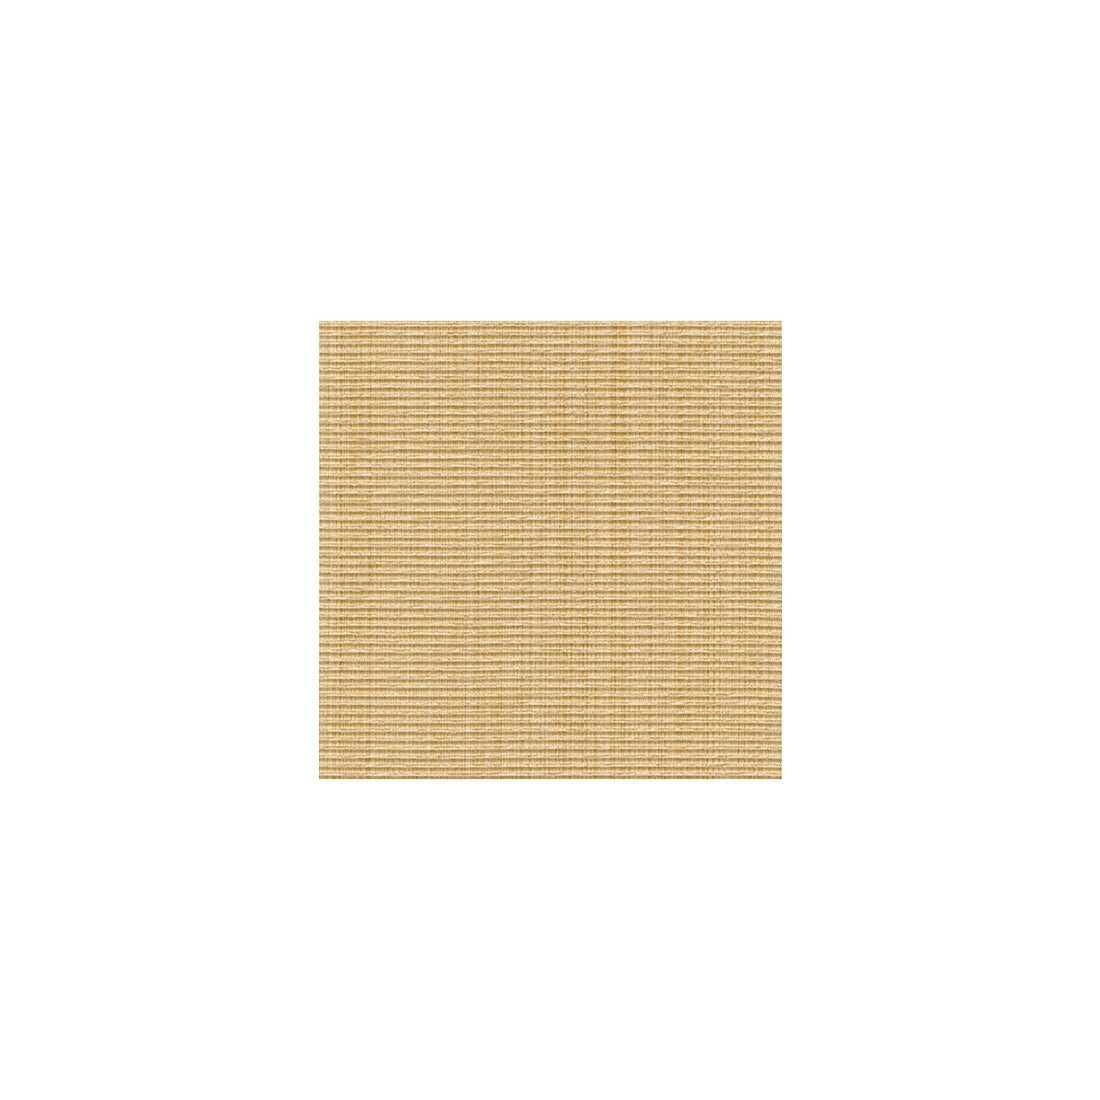 Kravet Smart fabric in 31110-16 color - pattern 31110.16.0 - by Kravet Smart